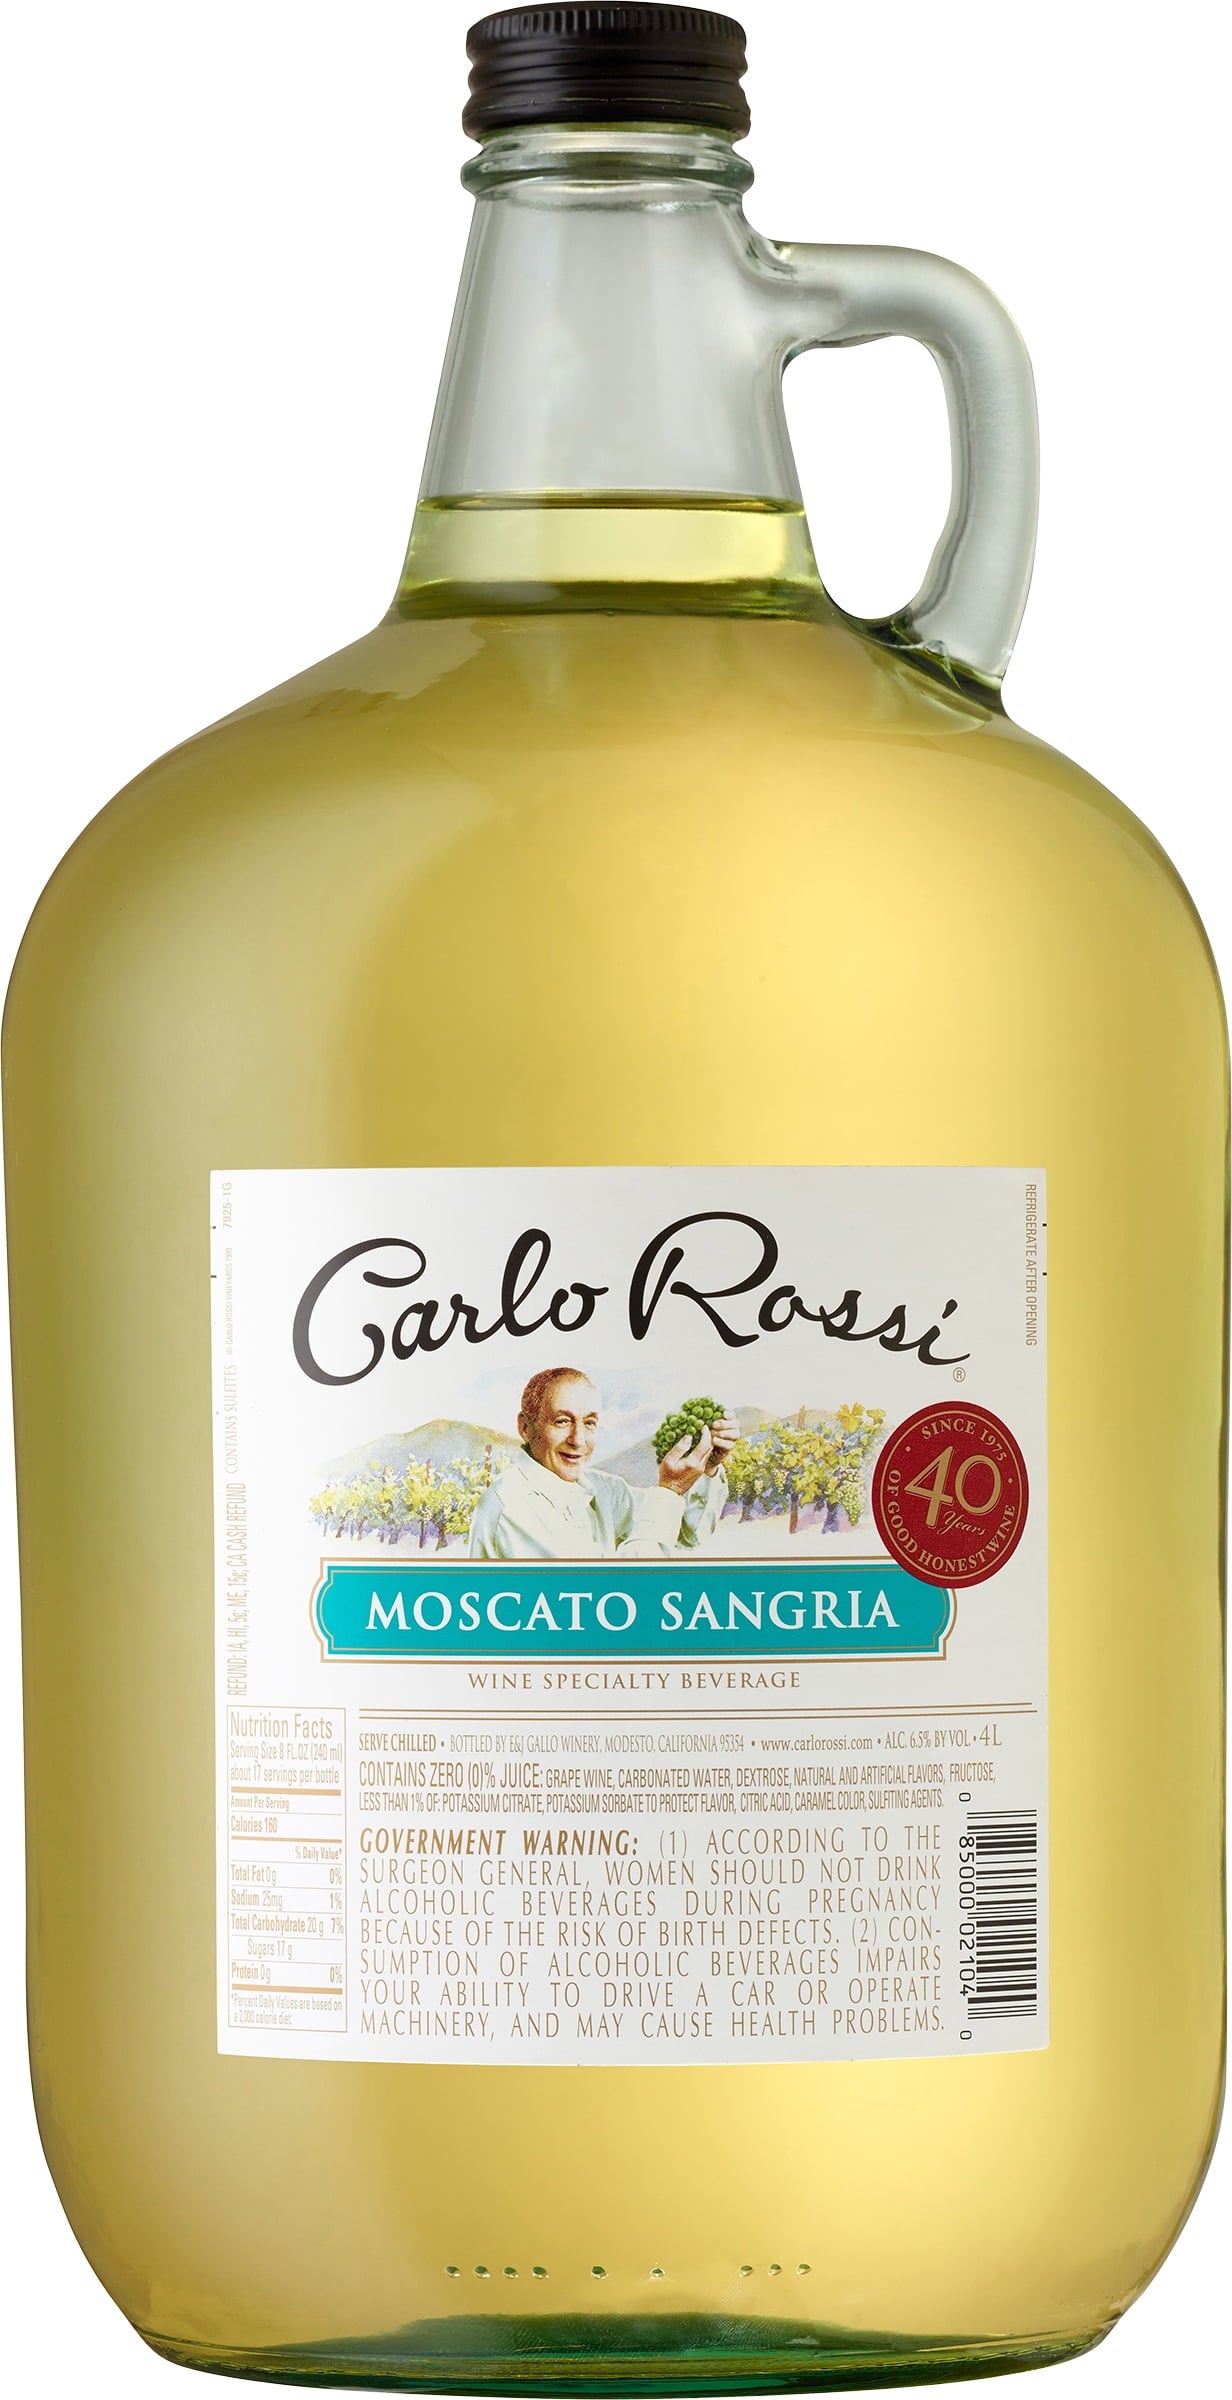 Carlo Rossi Moscato Sangria Wine, California, 4 Liter Glass Bottle